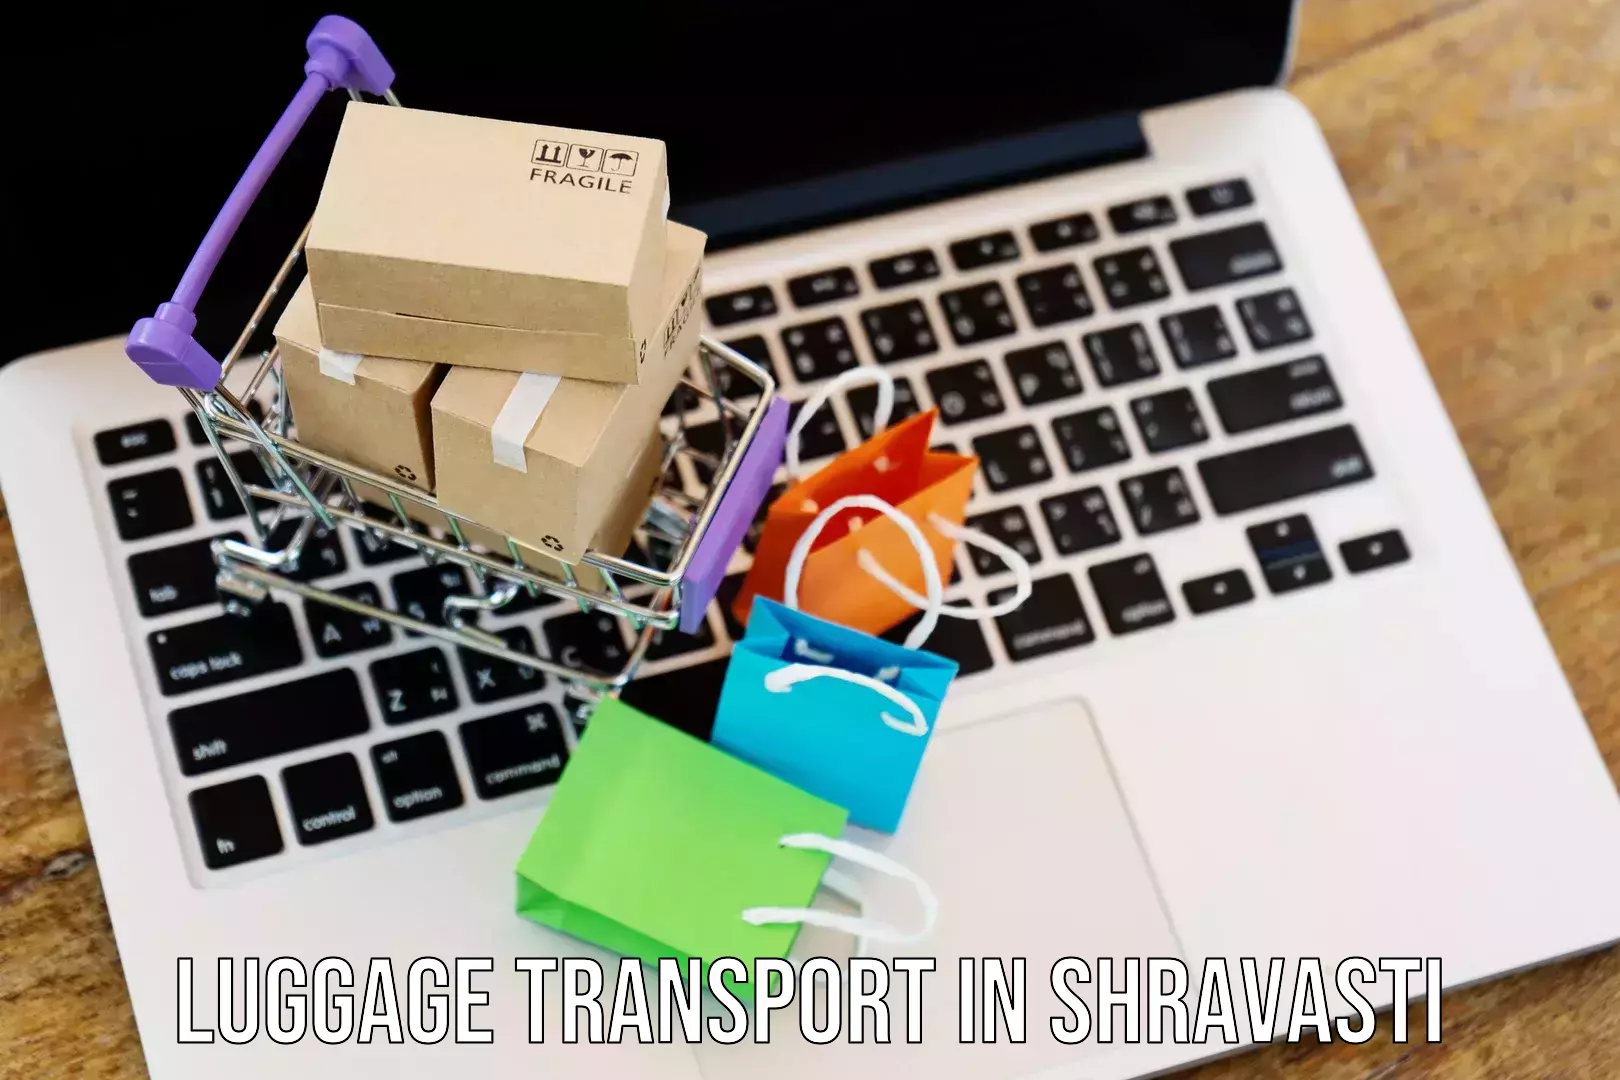 Regional luggage transport in Shravasti